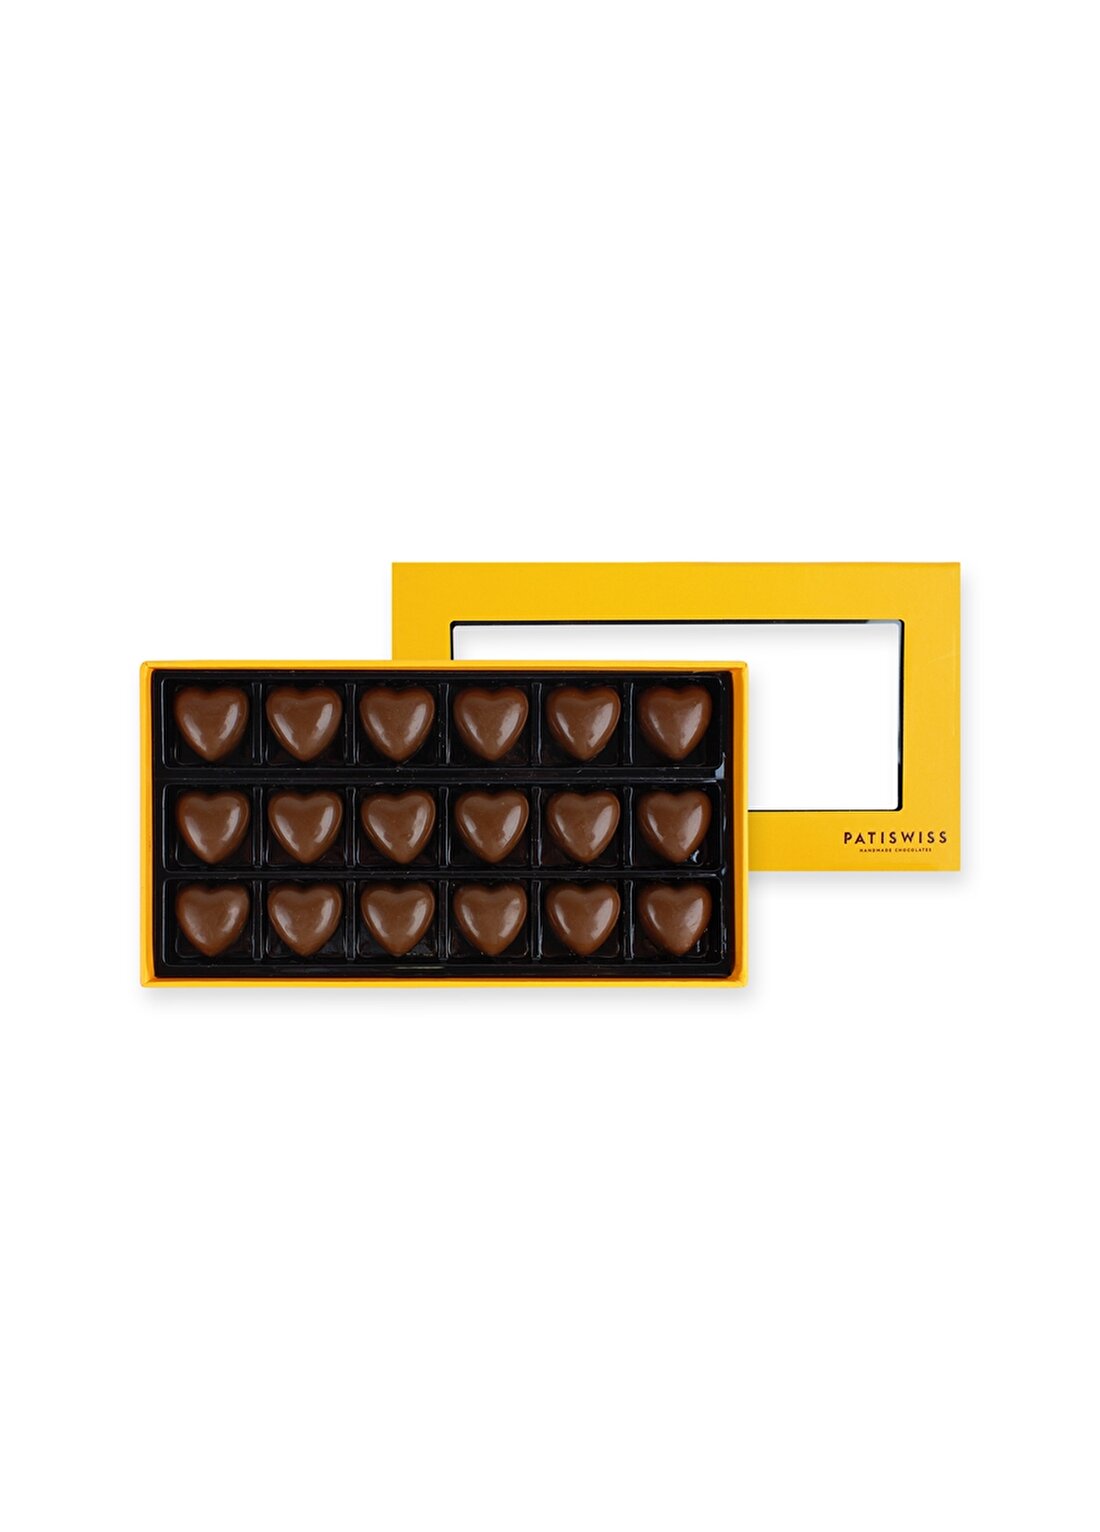 Patiswiss 192 Gr Dolgulu Sütlü Kalpli Çikolata